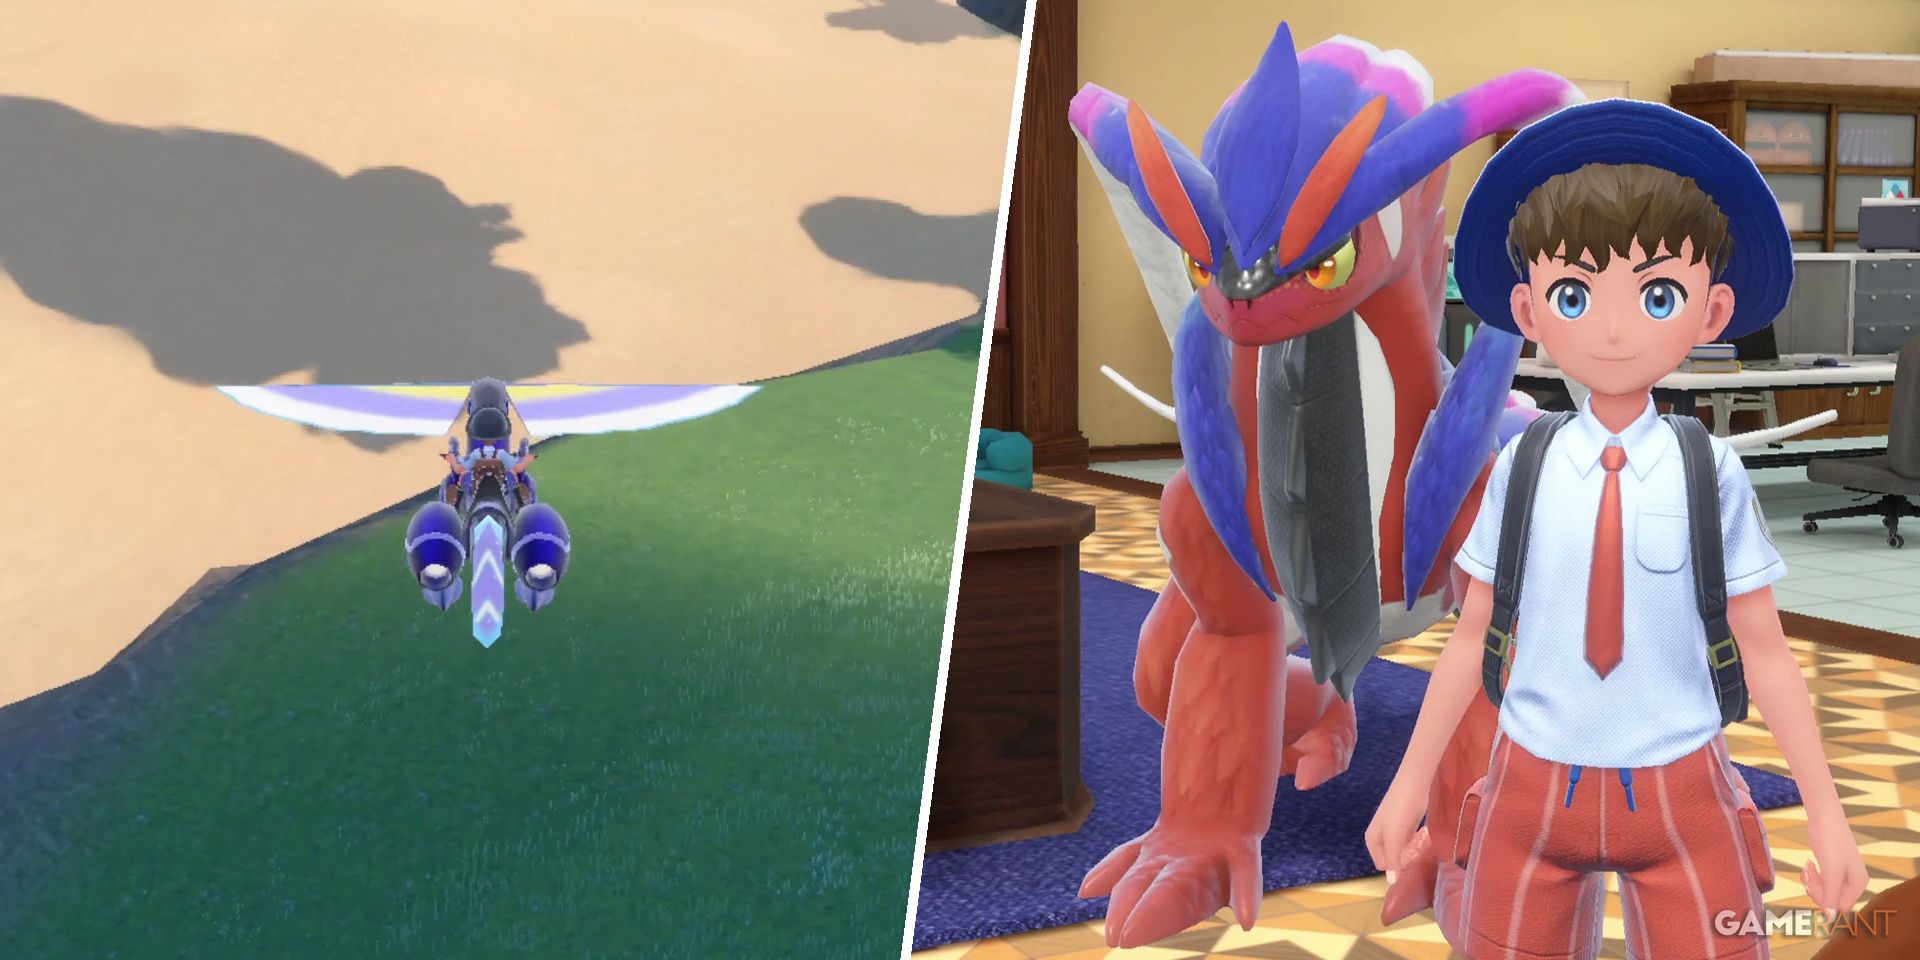 Pokémon Scarlet and Violet bug turns Koraidon and Miraidon into planes